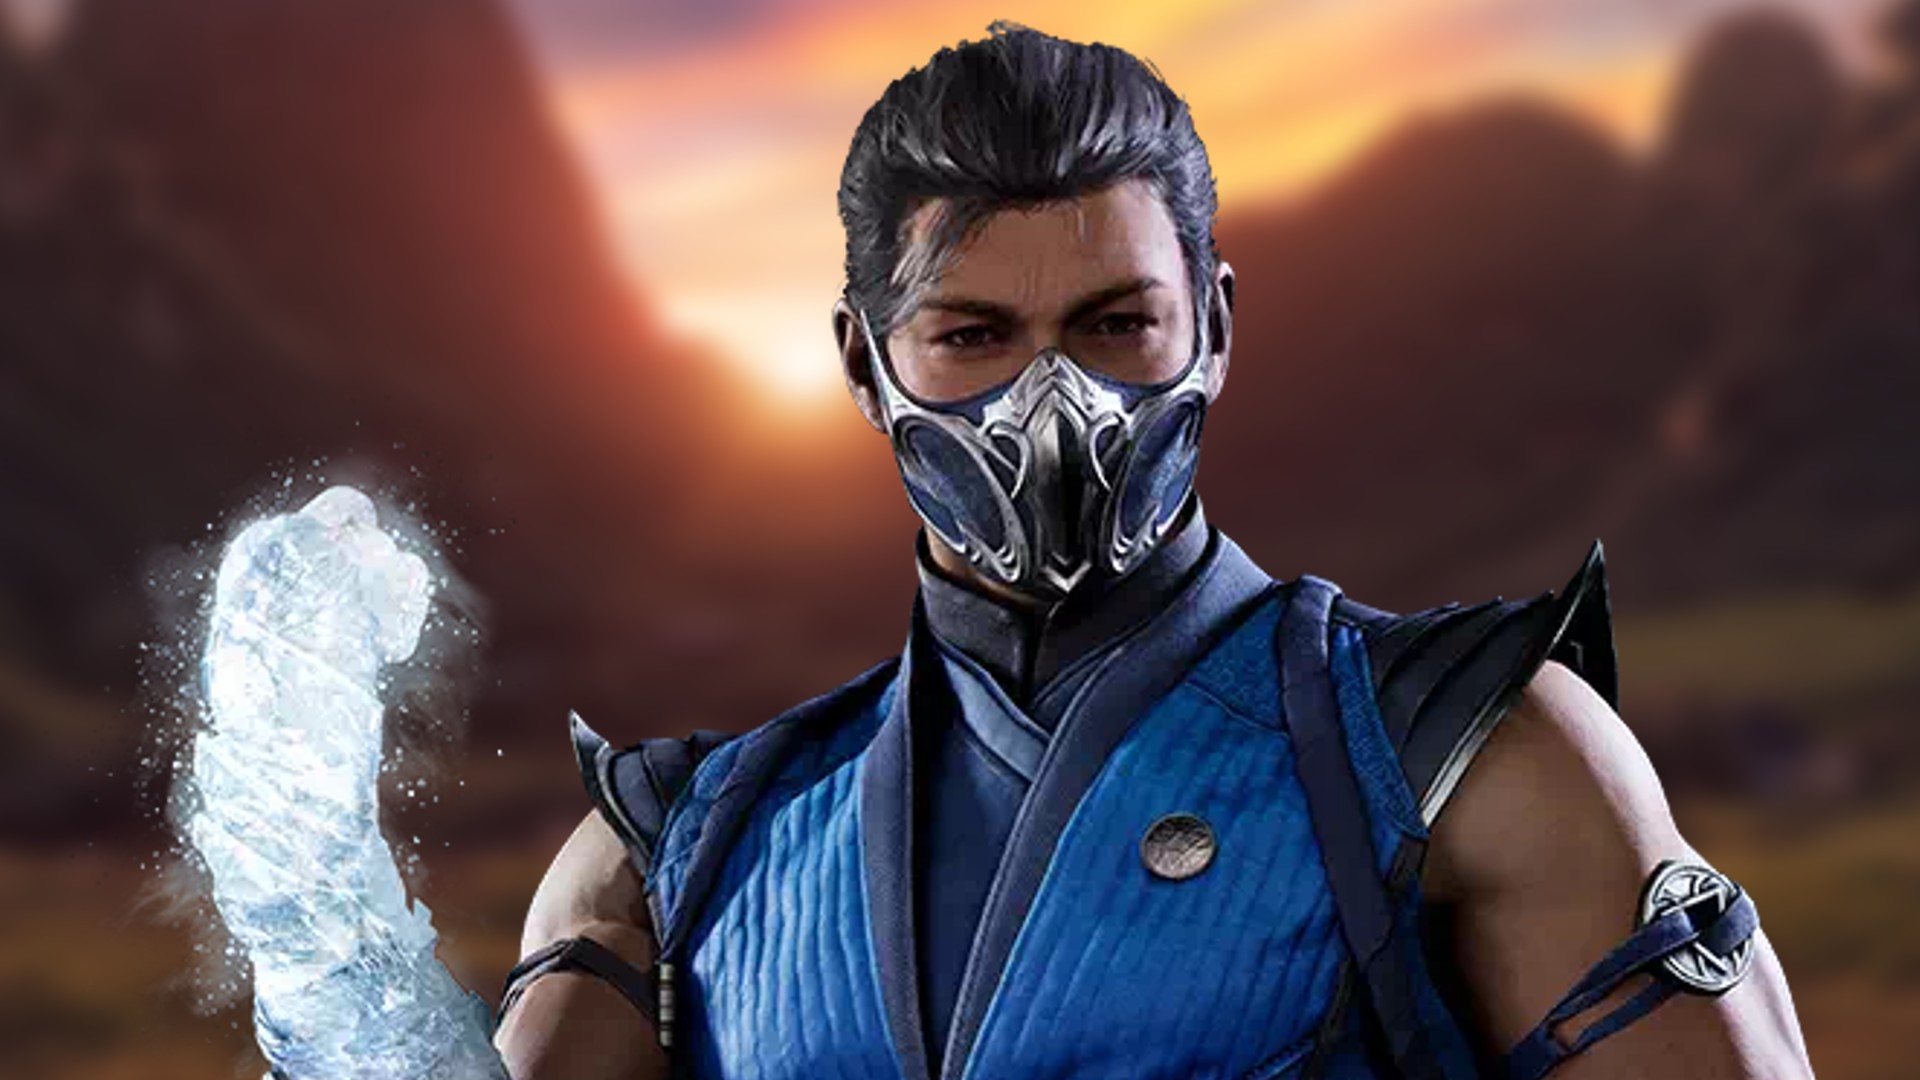 Download Fierce Liu Kang ready to strike in Mortal Kombat Wallpaper